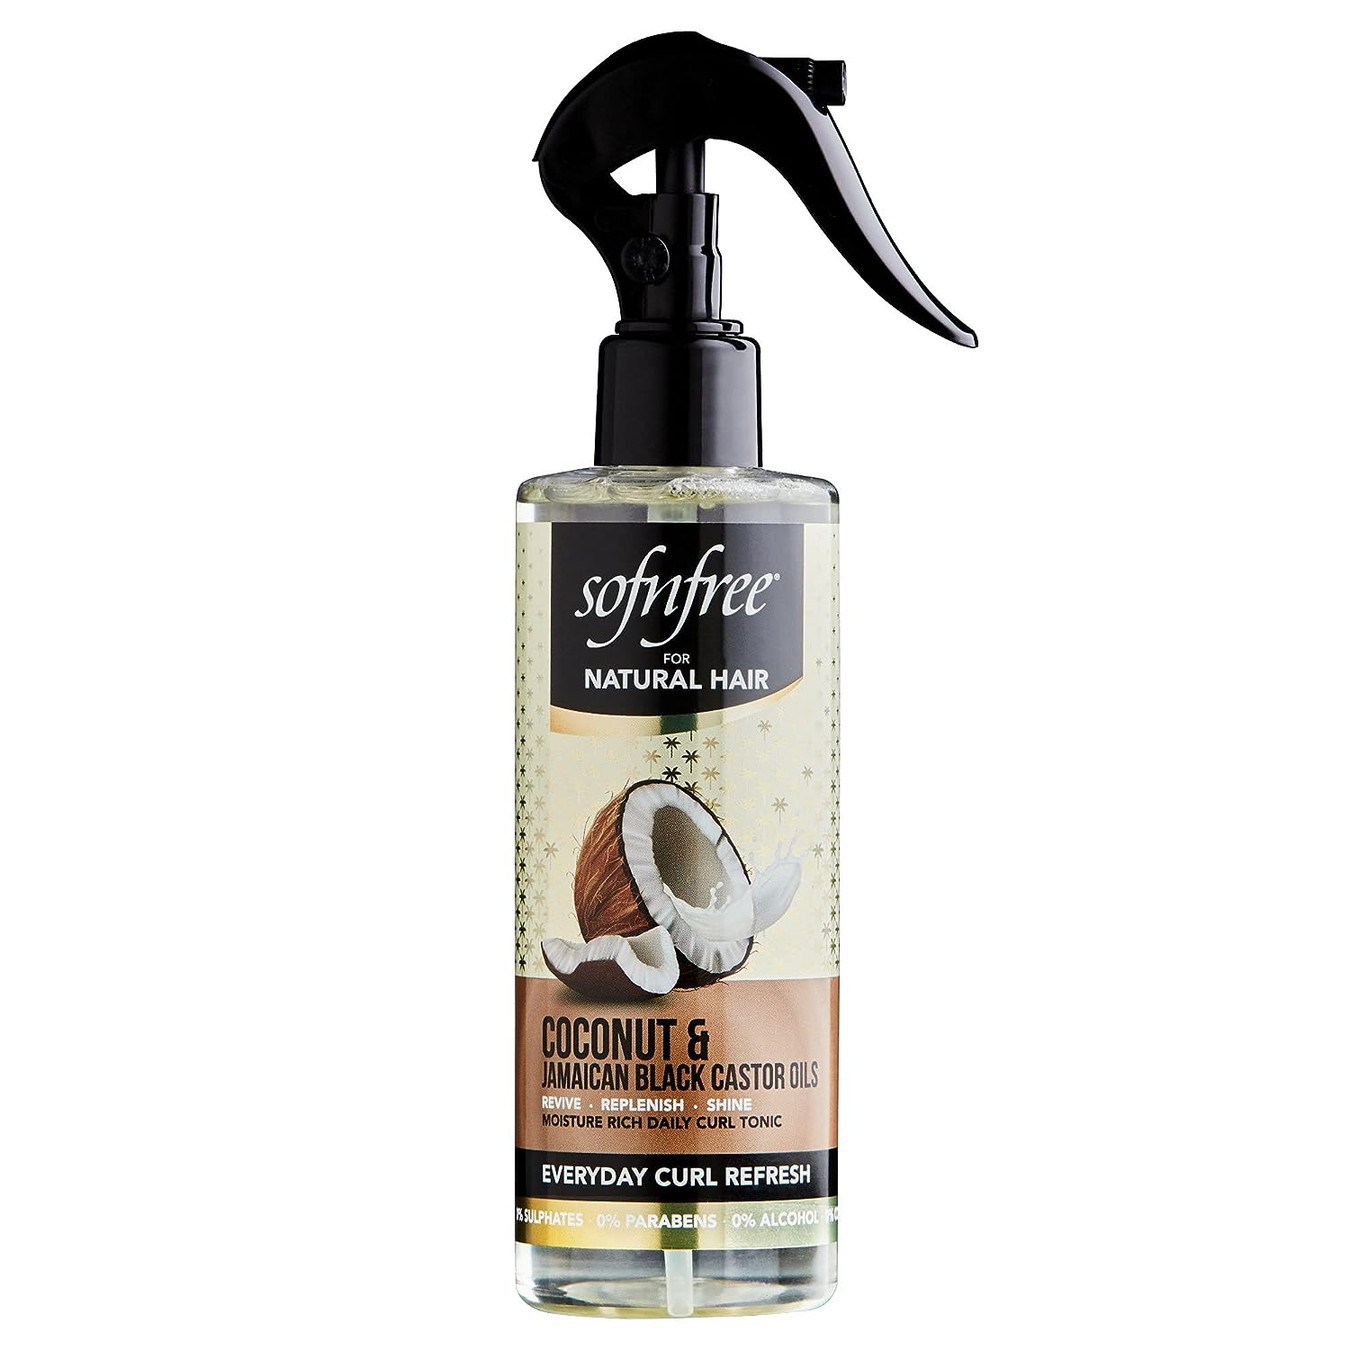 Sofnfree Curl Coconut & Jamaican Black Castor Oil Everyday Curl Refresh (8.12 oz)